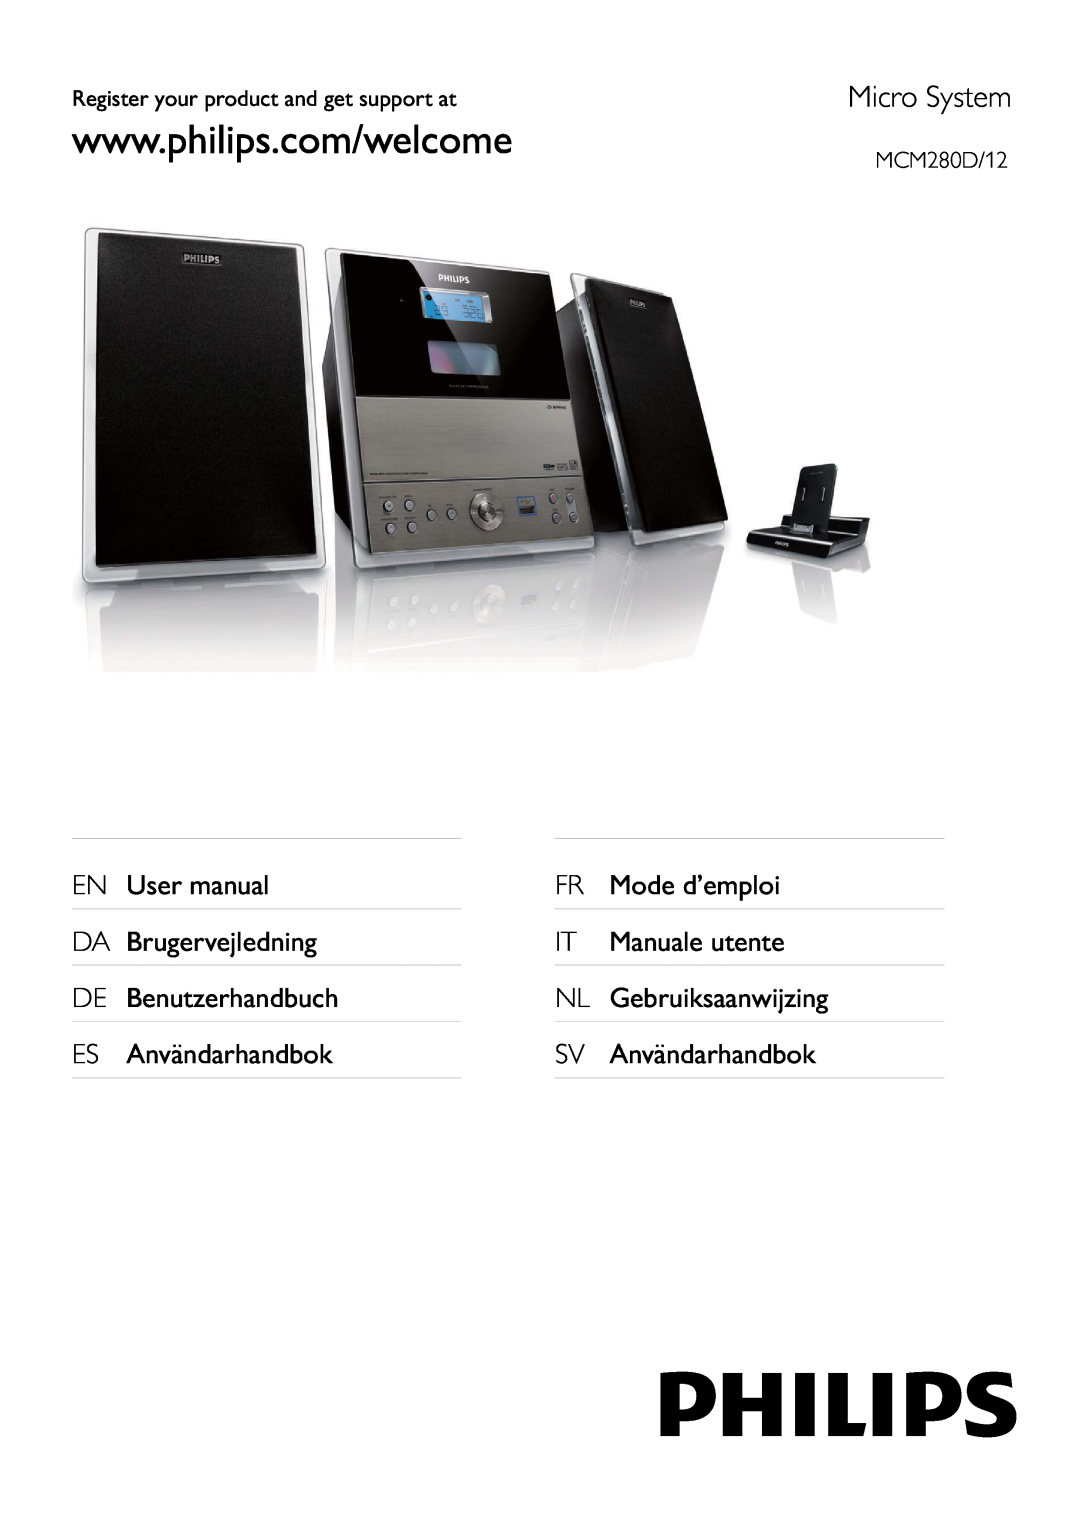 Philips MCM280D/12 user manual DE Benutzerhandbuch ES Användarhandbok, FR Mode d’emploi IT Manuale utente, Micro System 